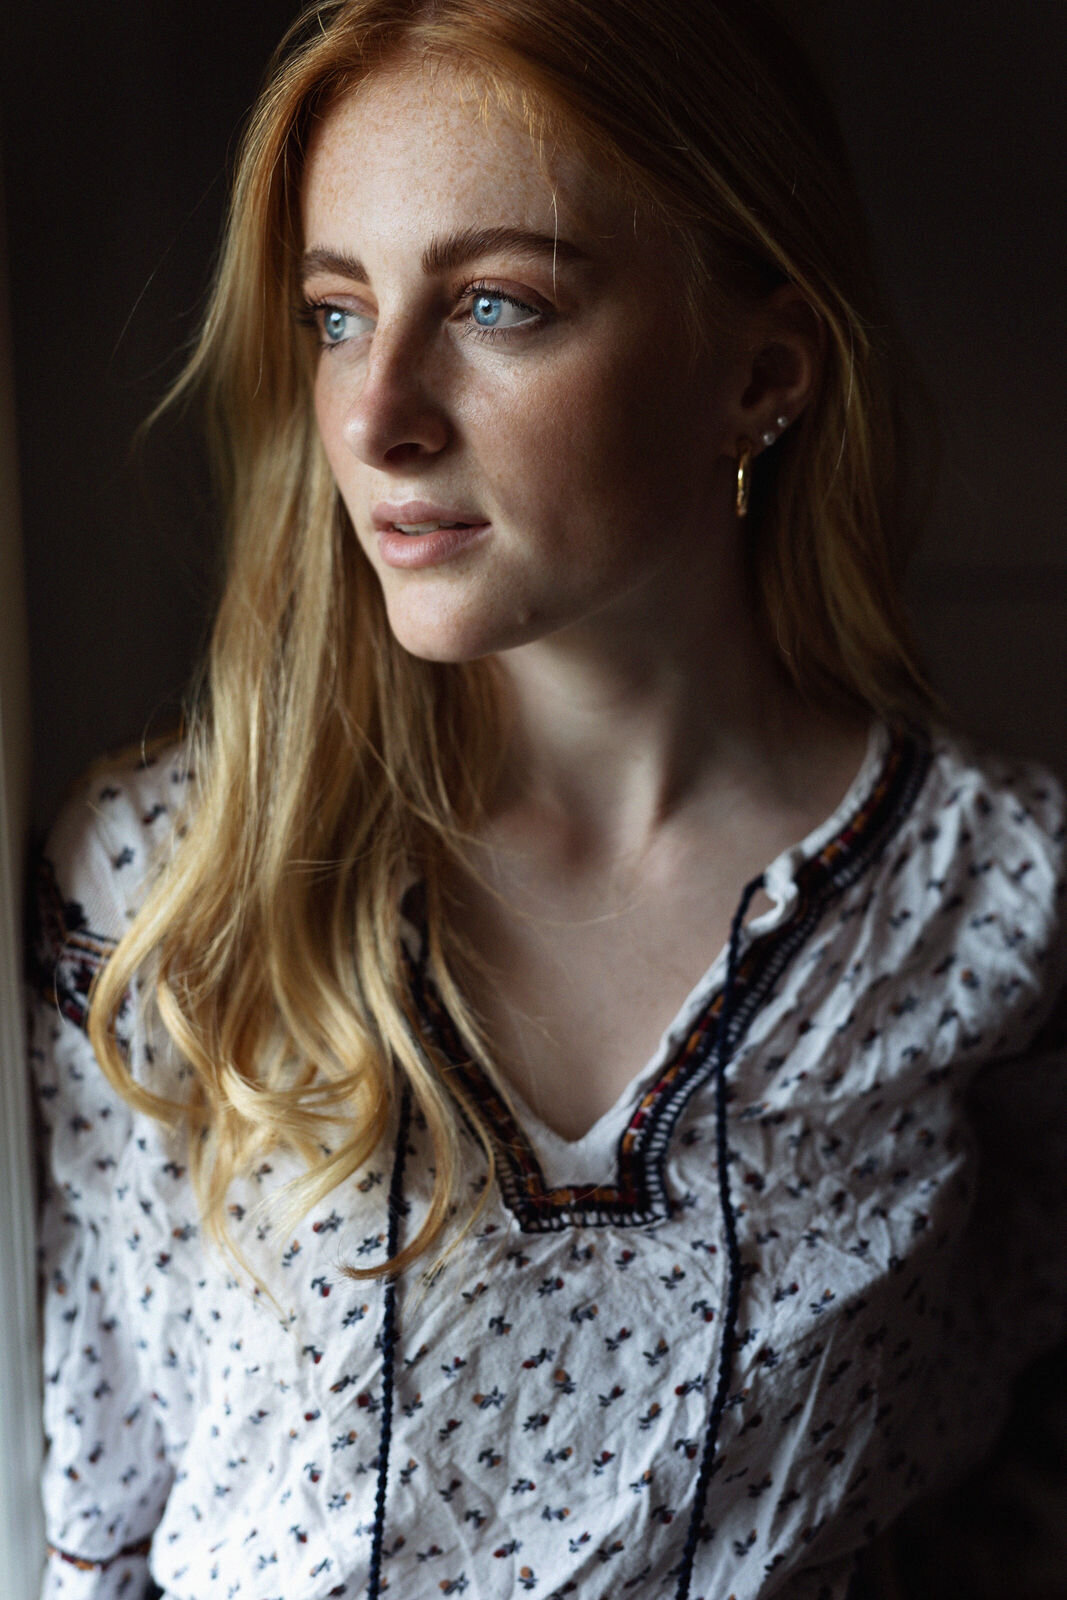 yasmine-pauchard-portraitfotografie-schweiz-lifestyle-fotografin (16)